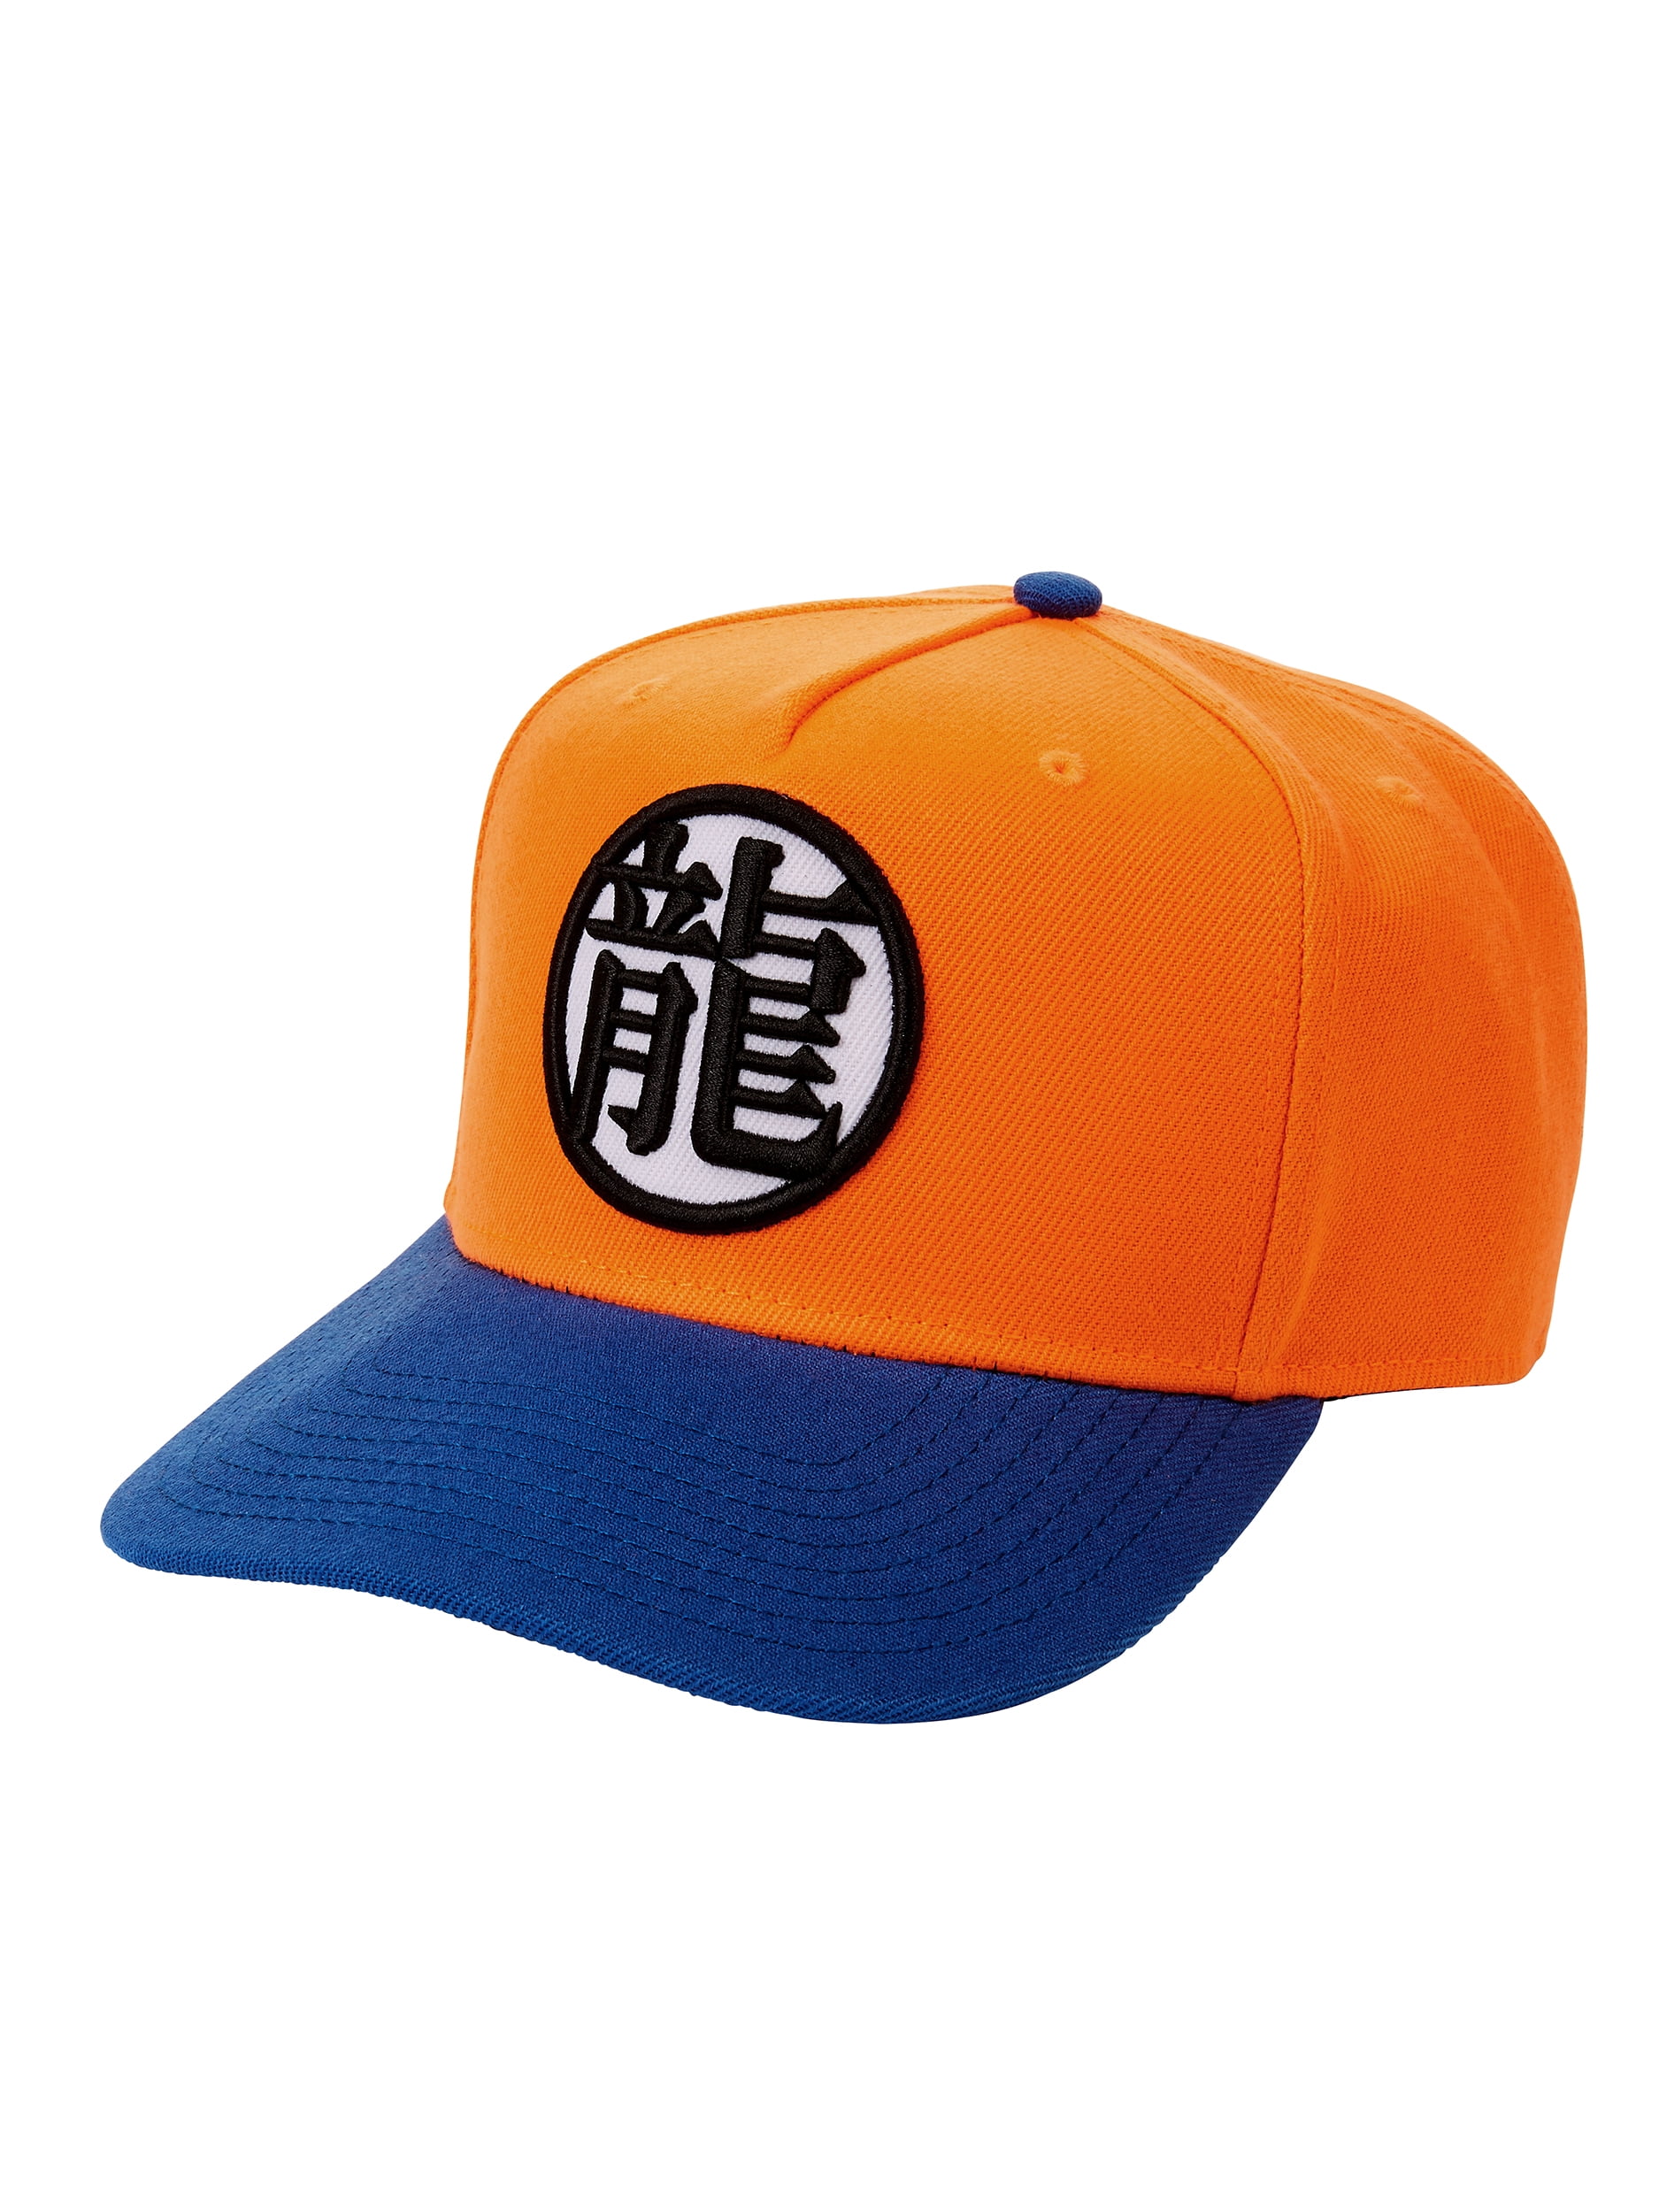 Boys Dragon Ball Z Snapback Hat Orange